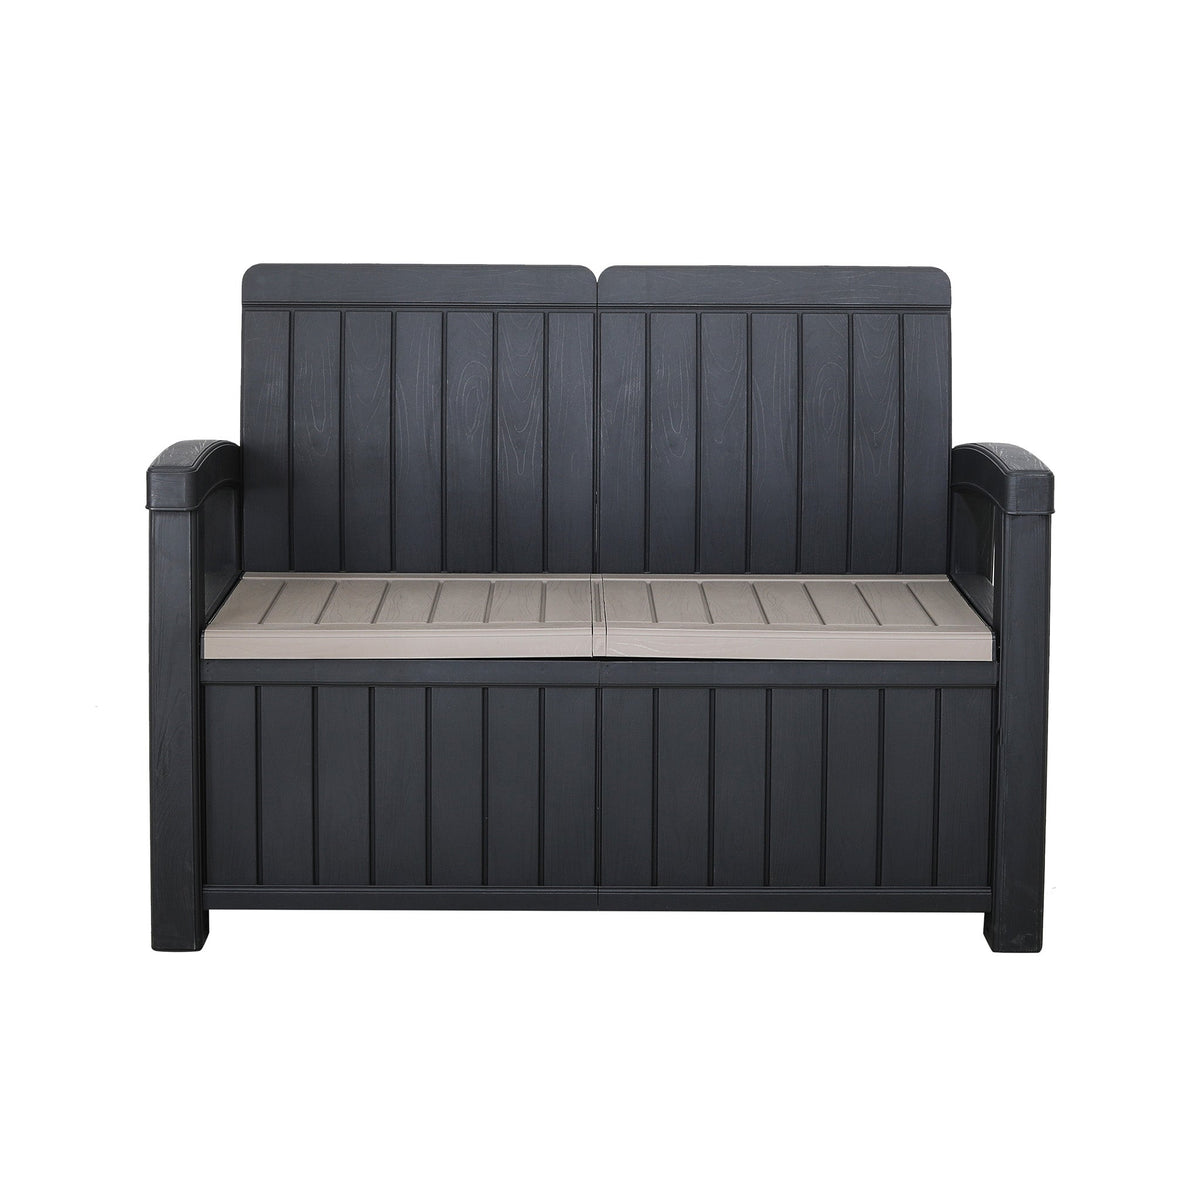 Faro Black 4 Seat Garden Lounge Set 2 Person Bench